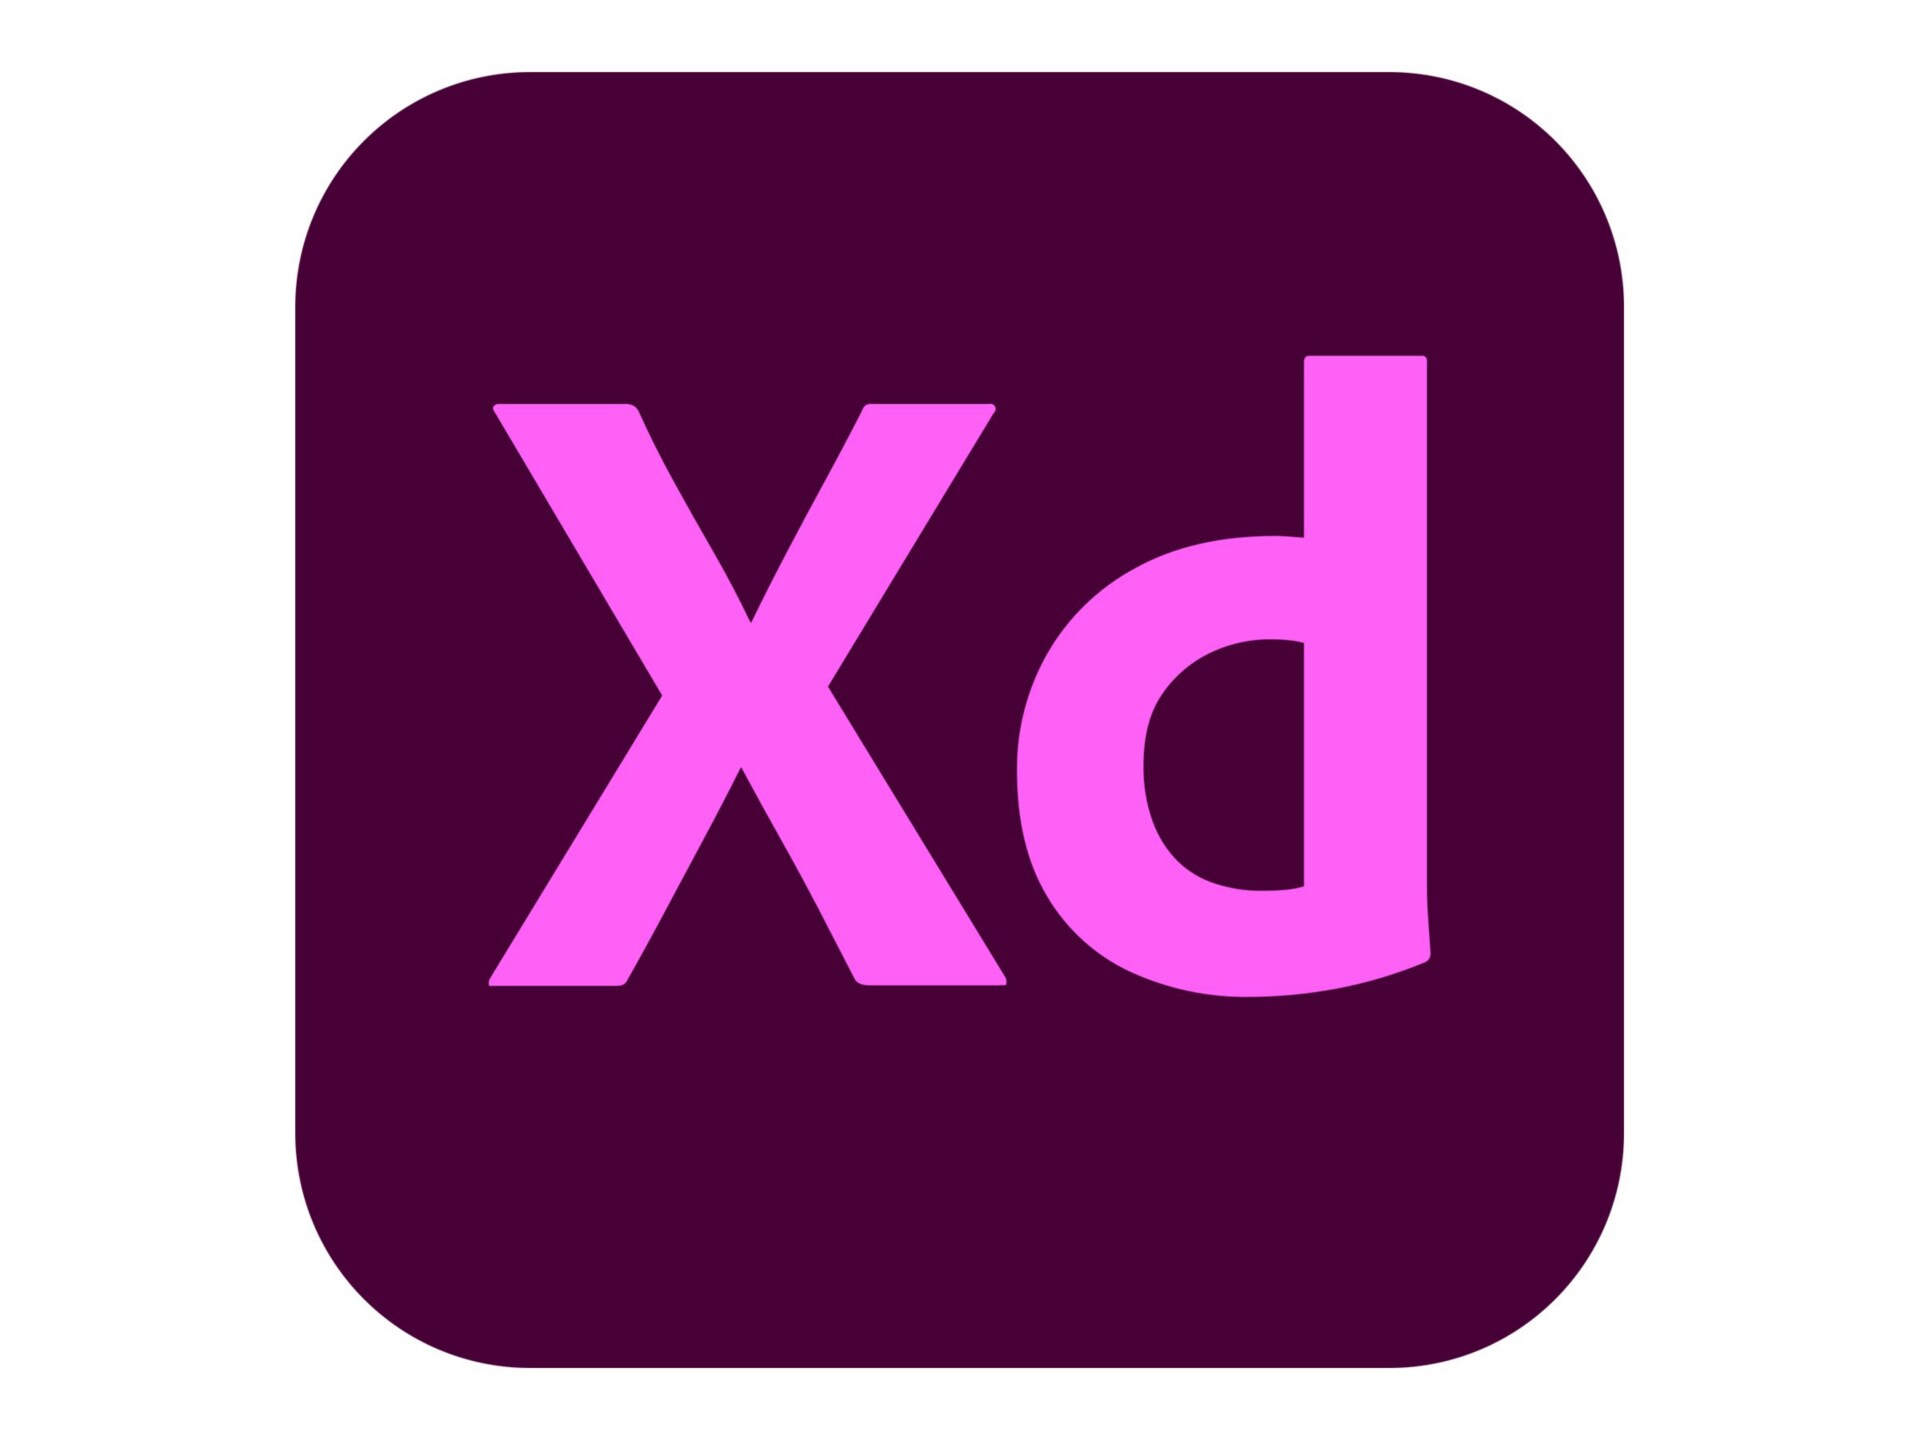 Adobe XD CC for Enterprise - Subscription New (34 months) - 1 named user